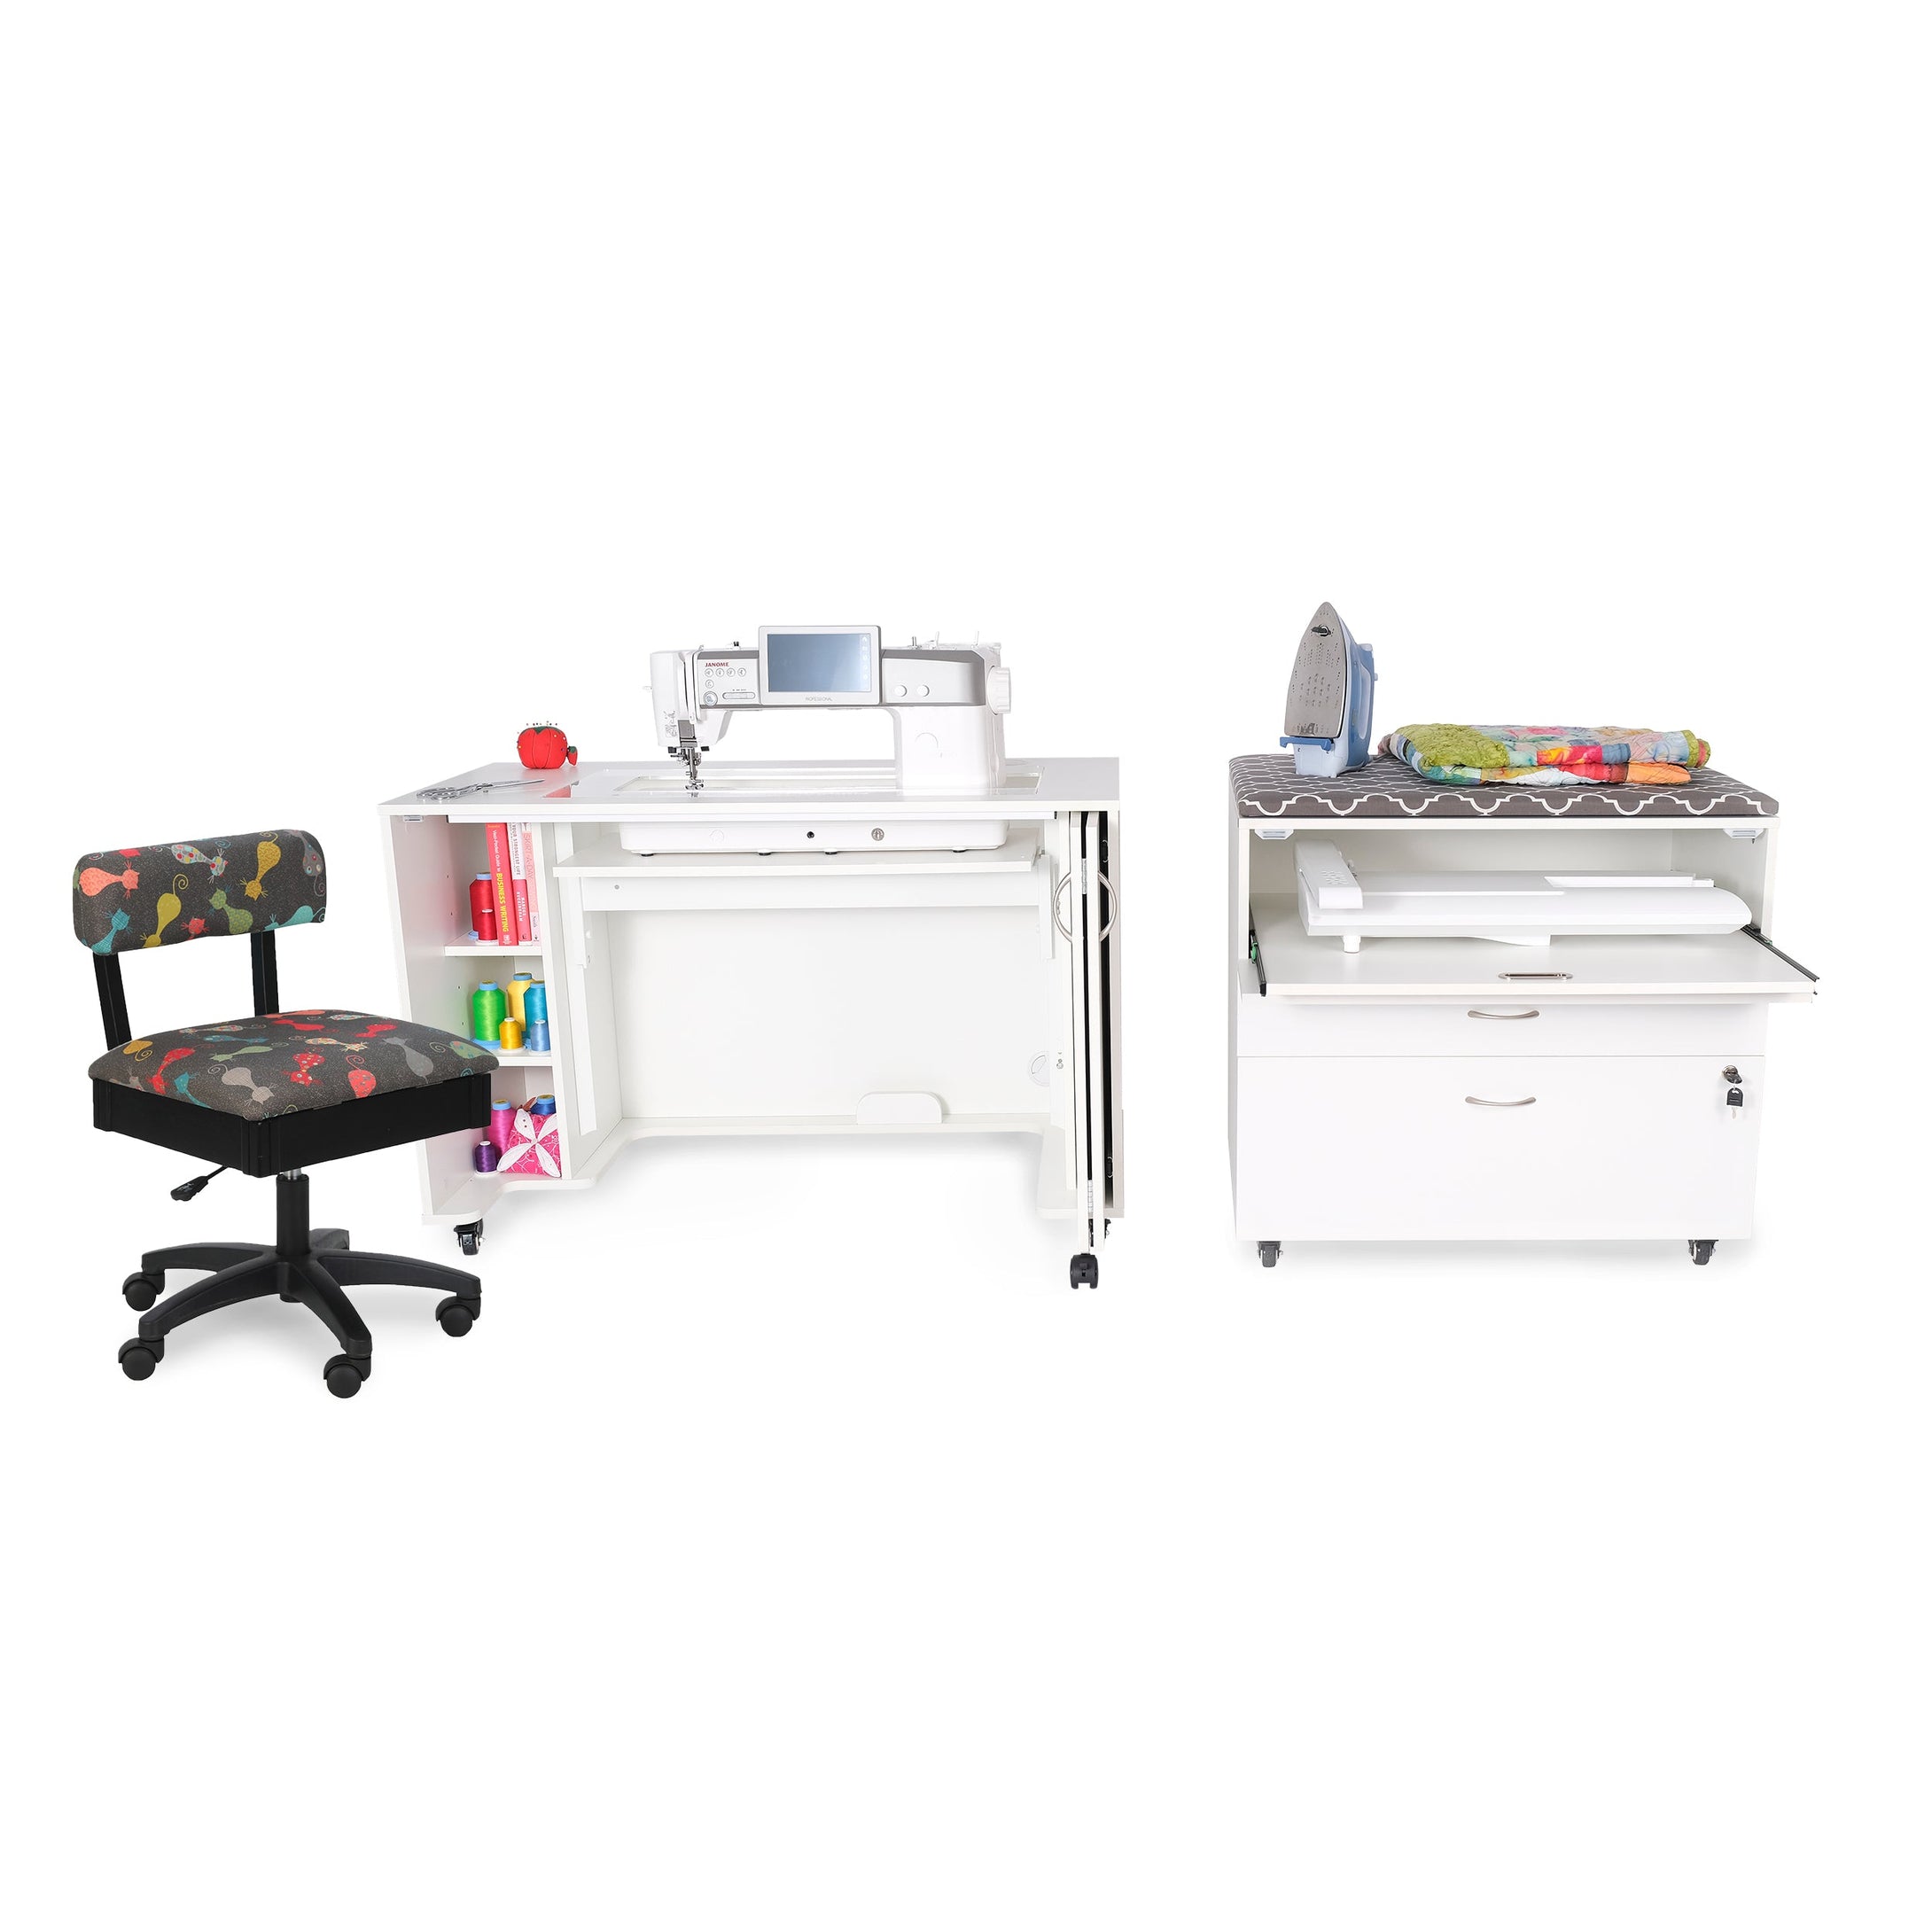 MOD XL Hydraulic Sewing  Cabinet with Embroidery Storage Cabinet & Hydraulic Chair Bundle